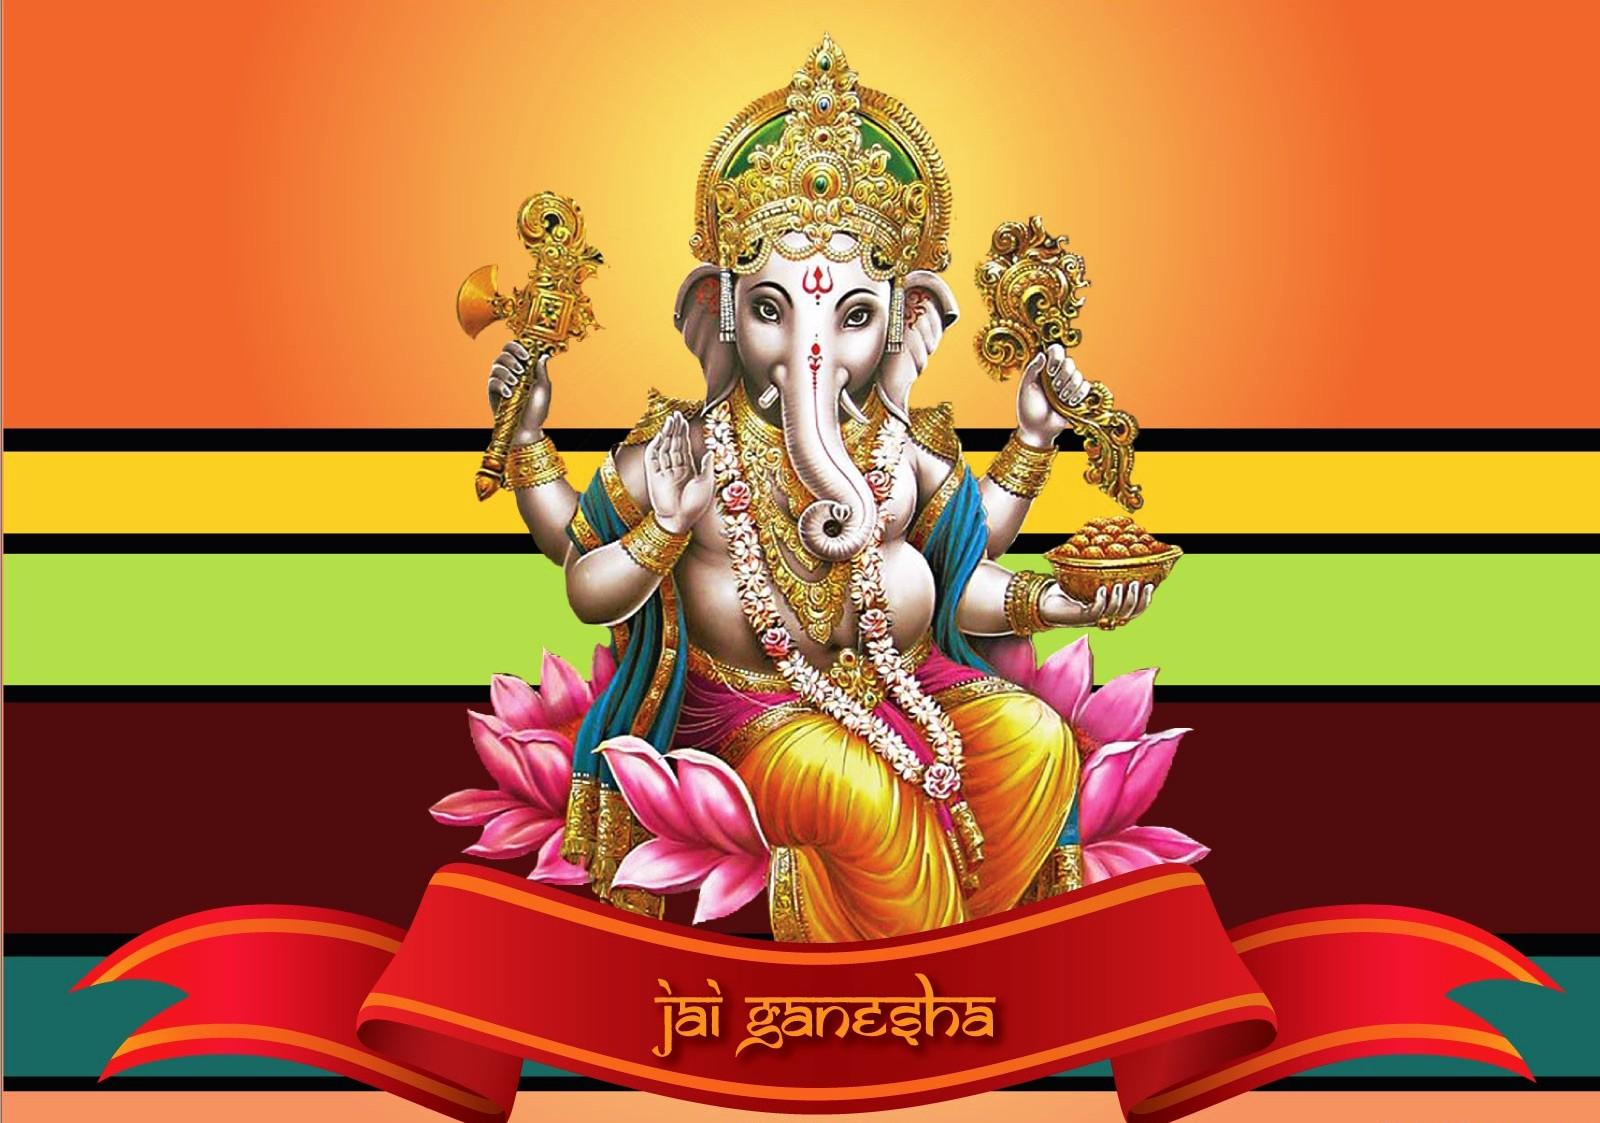 Download Free HD Wallpaper of Shree Ganesh / Ganpati